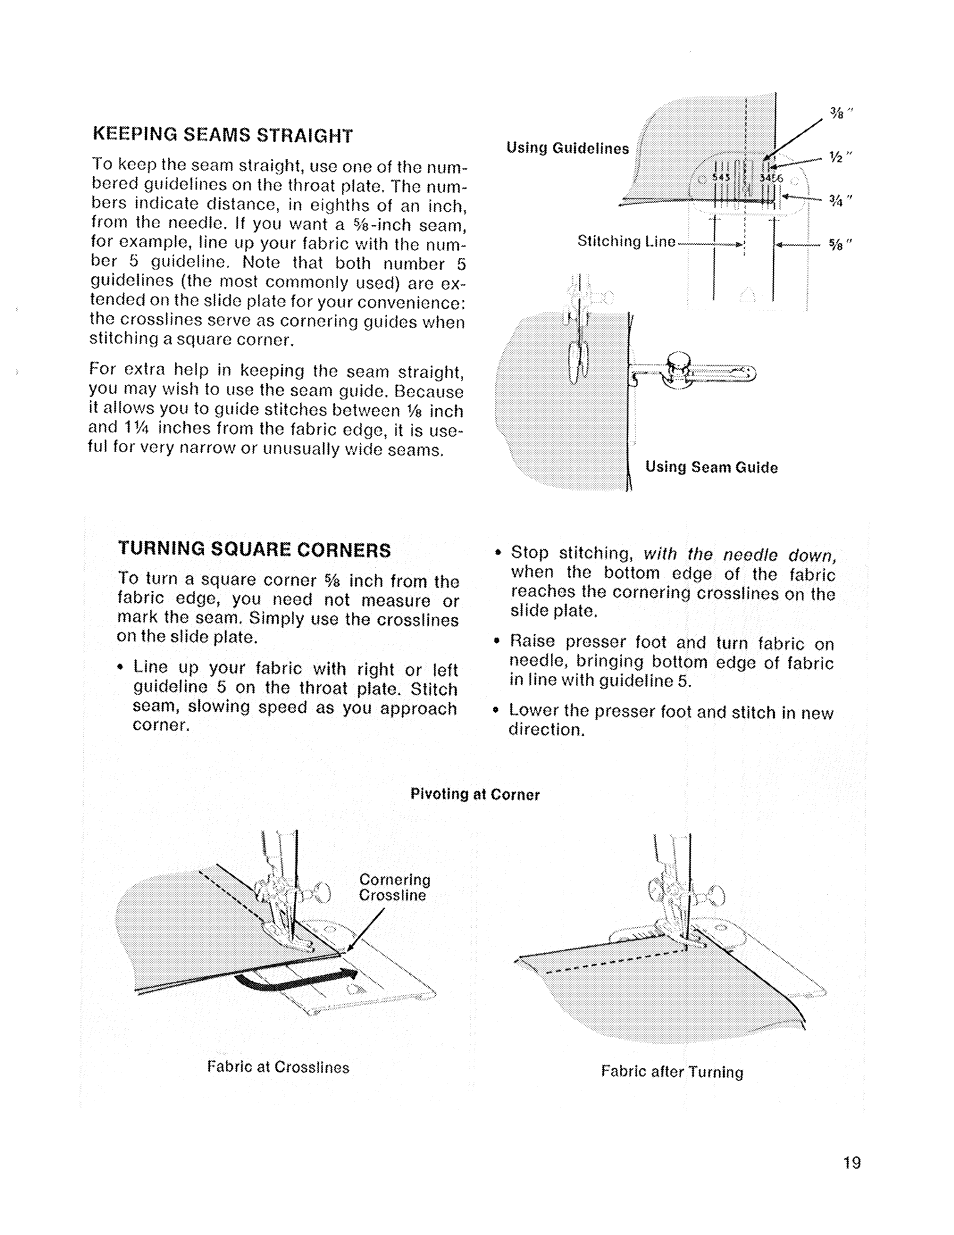 Keeping seams straight, Turning square corners | SINGER 719 User Manual | Page 21 / 36